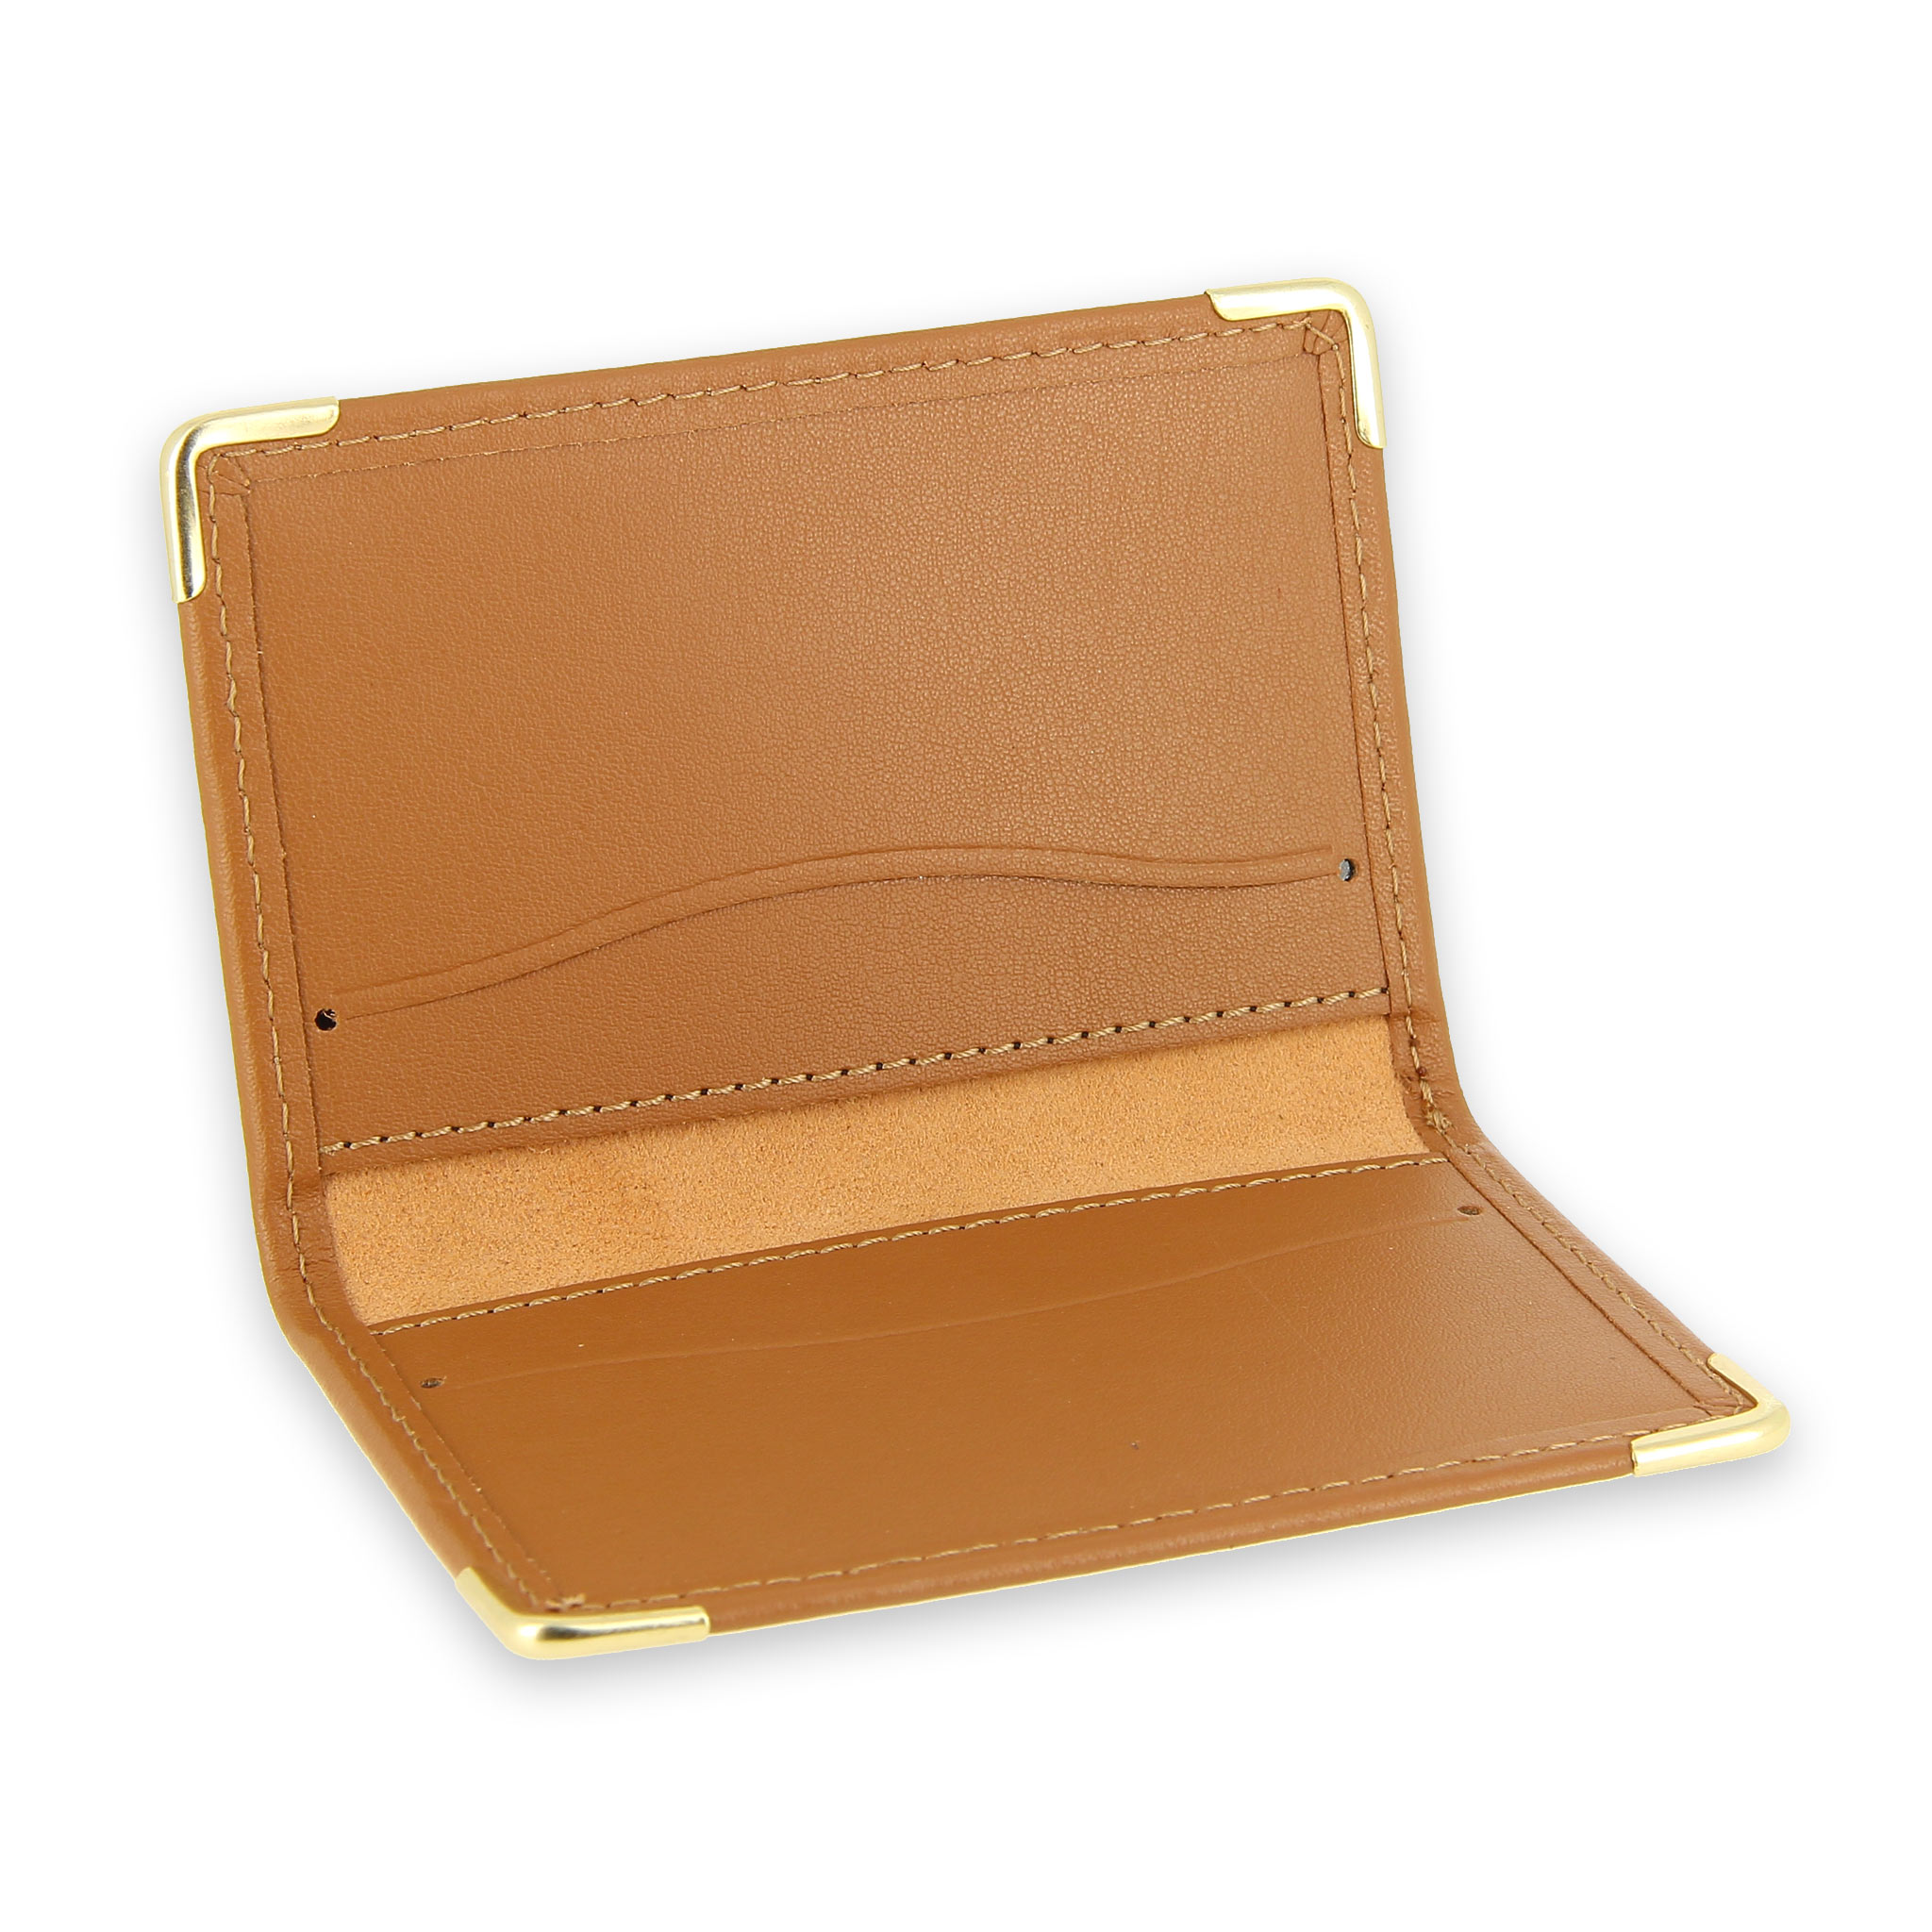 Personnalisez votre porte-cartes networking en cuir Made in France